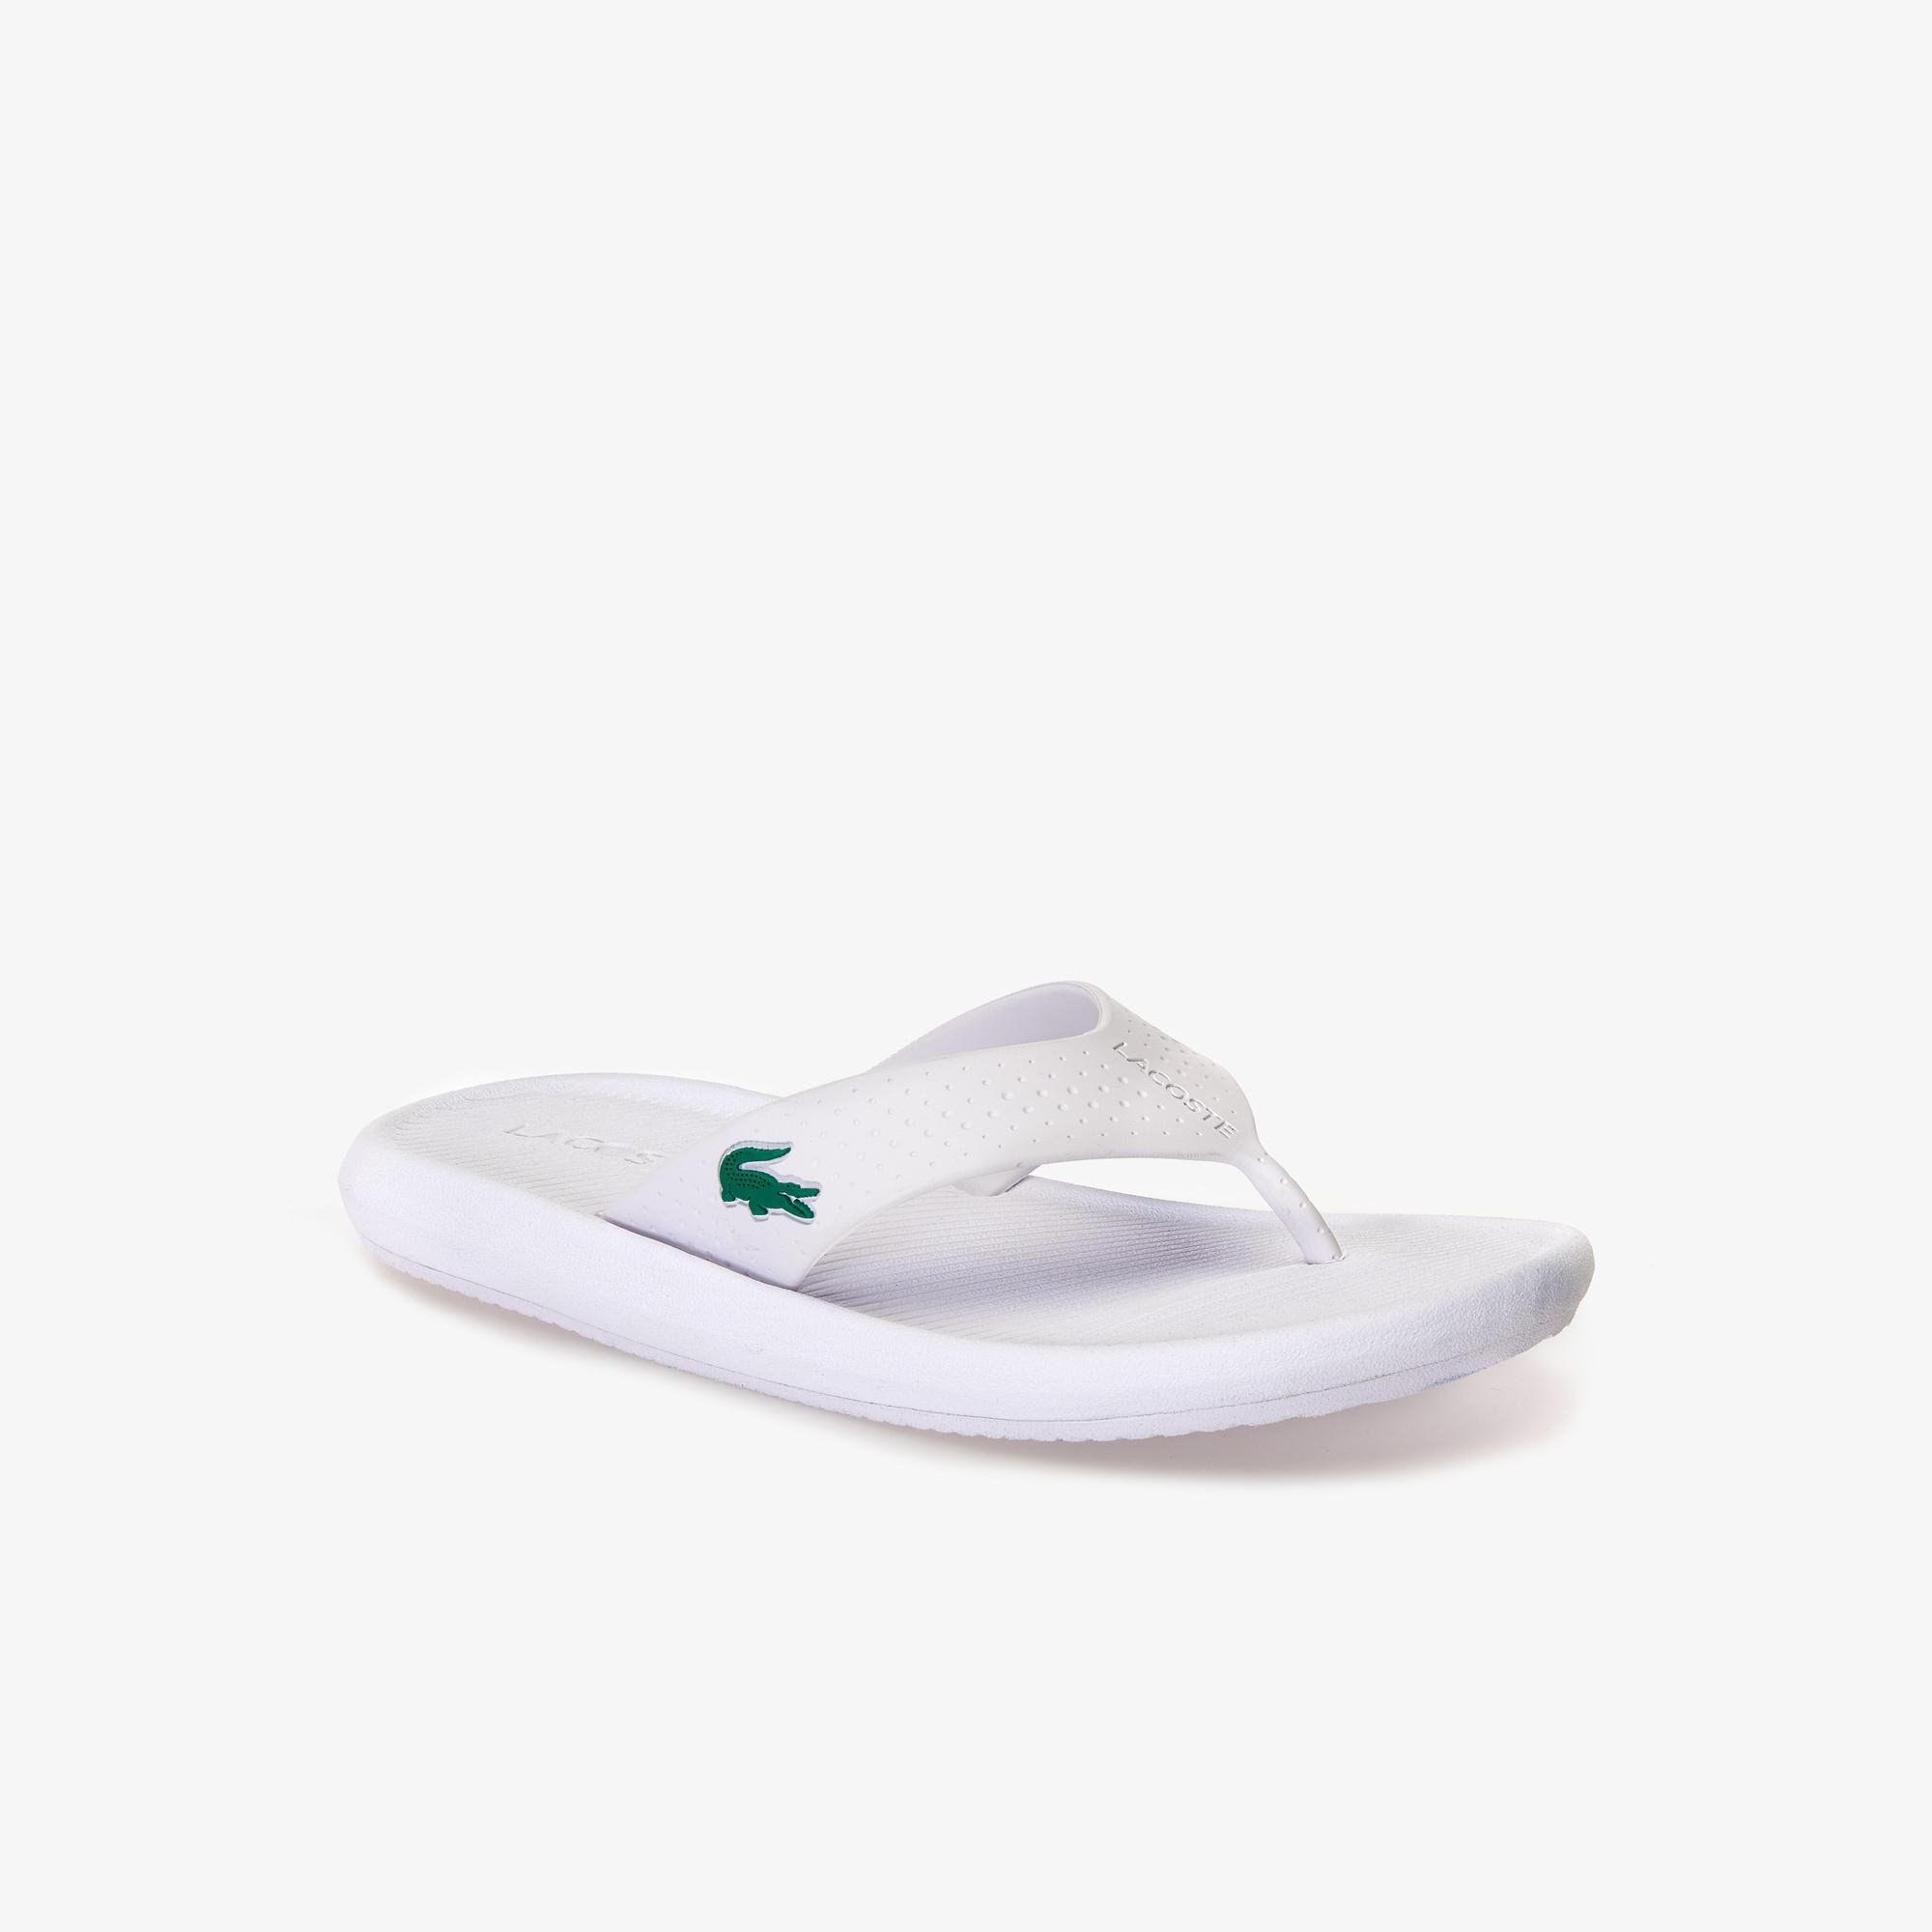 Lacoste Croco 219 1 Women's Sandals